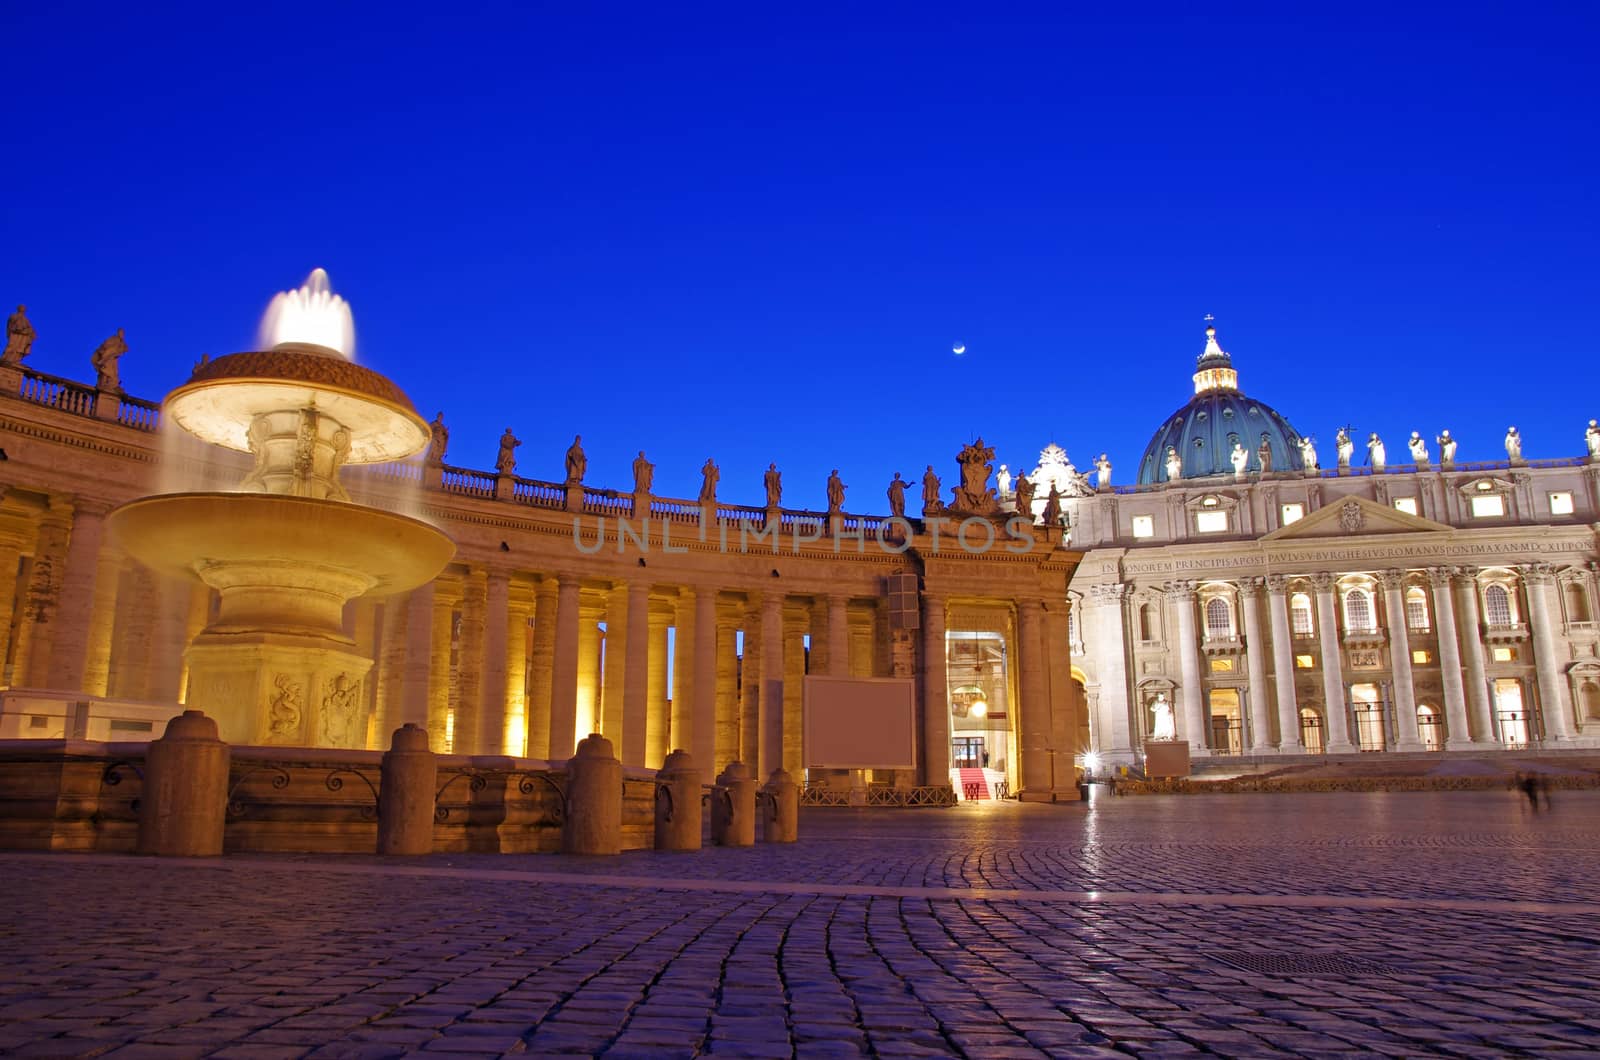 Night scene in Saint Peter Square in Vatican